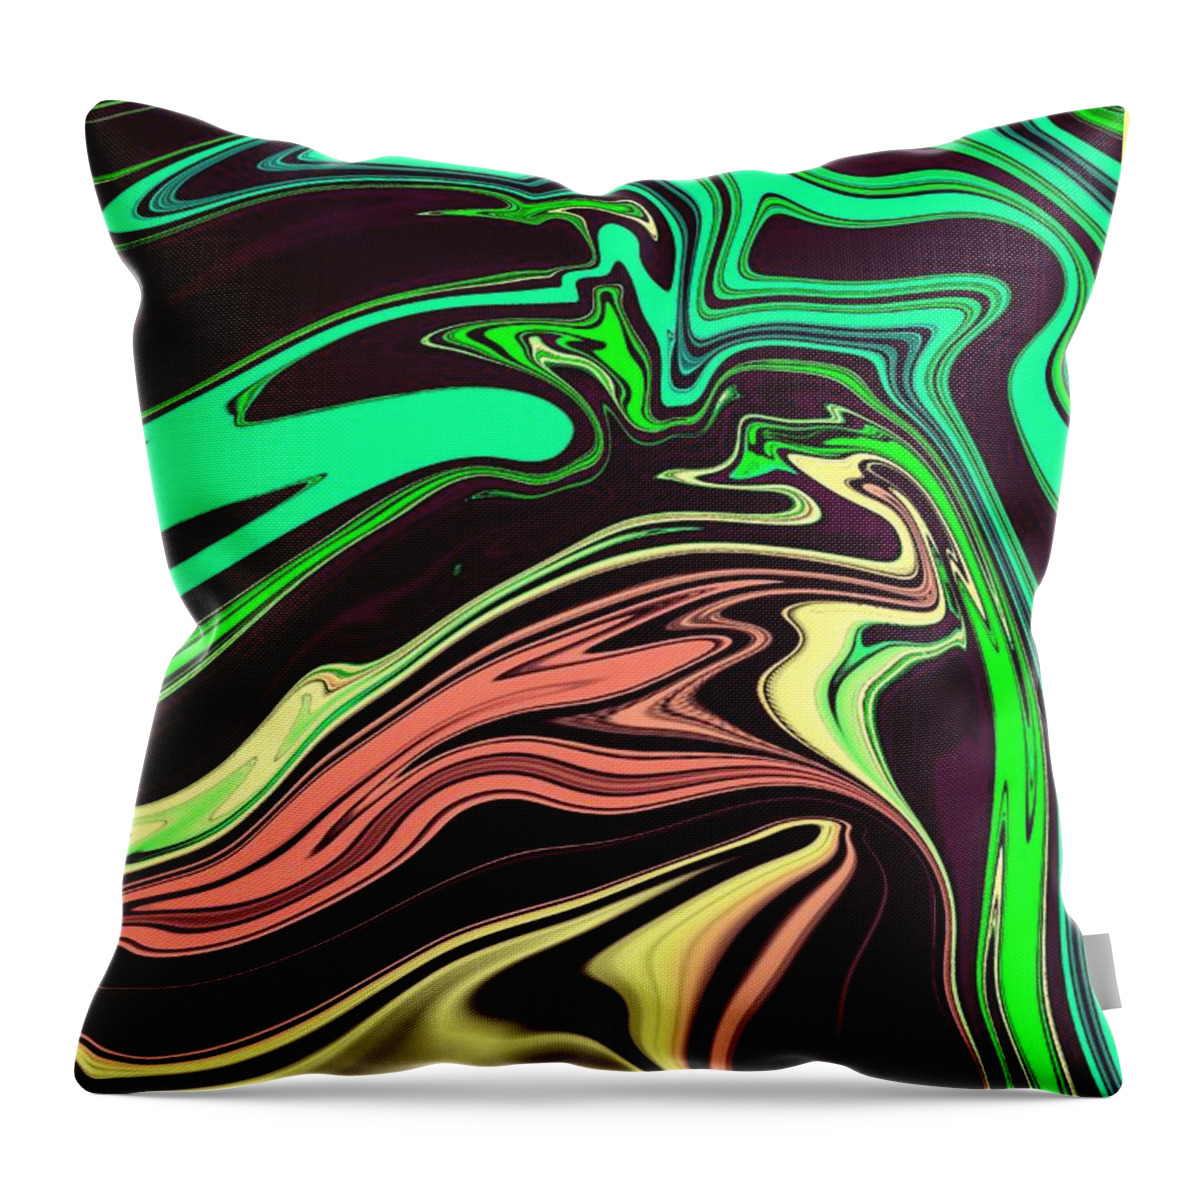  Throw Pillow featuring the digital art Wild Woman by Michelle Hoffmann